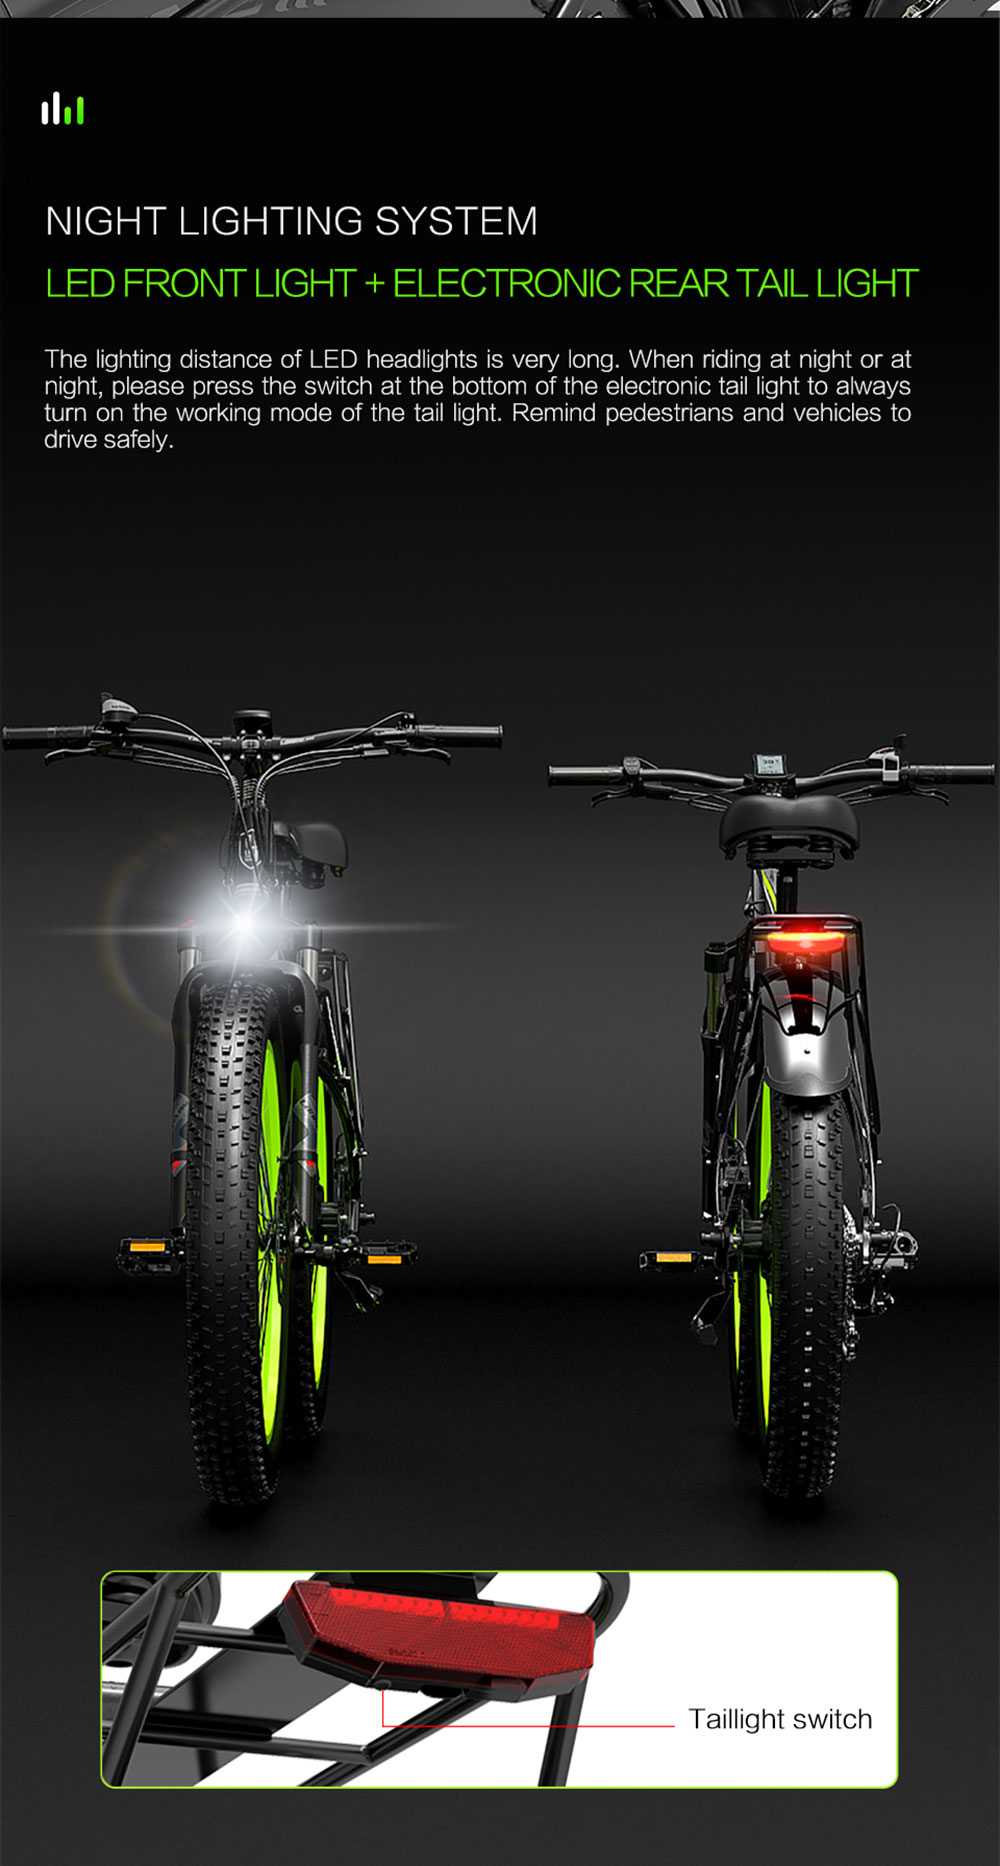 LANKELEISI XC4000 Electric Bike 48V 1000W Motor 17.5Ah Battery 26*4.0 Fat Tire - Yellow